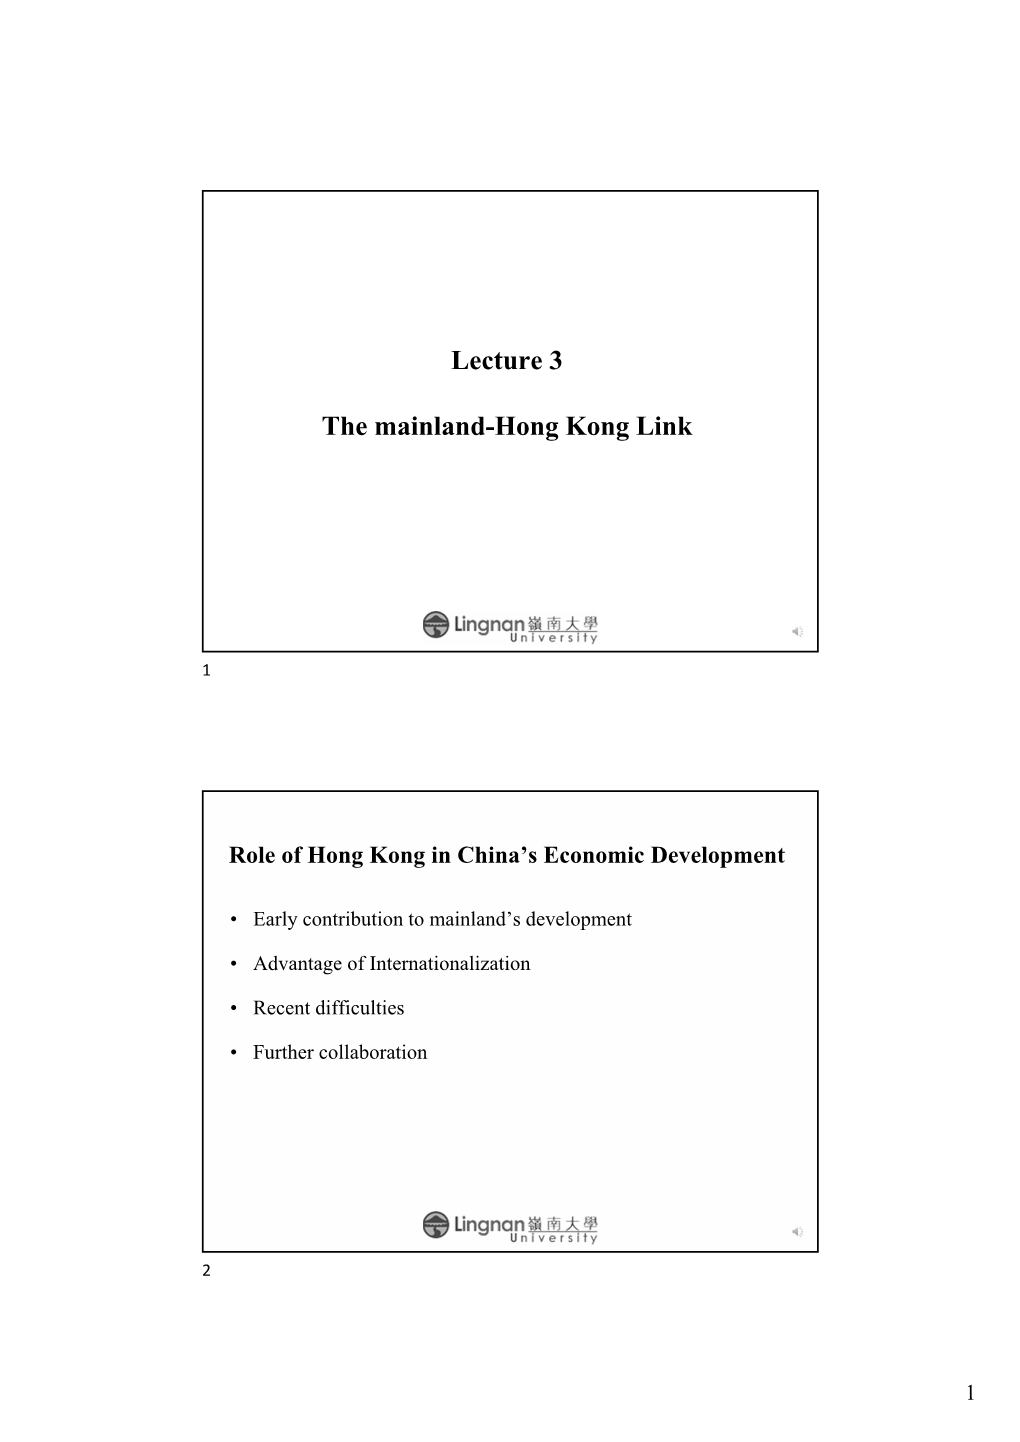 Lecture 3 the Mainland-Hong Kong Link